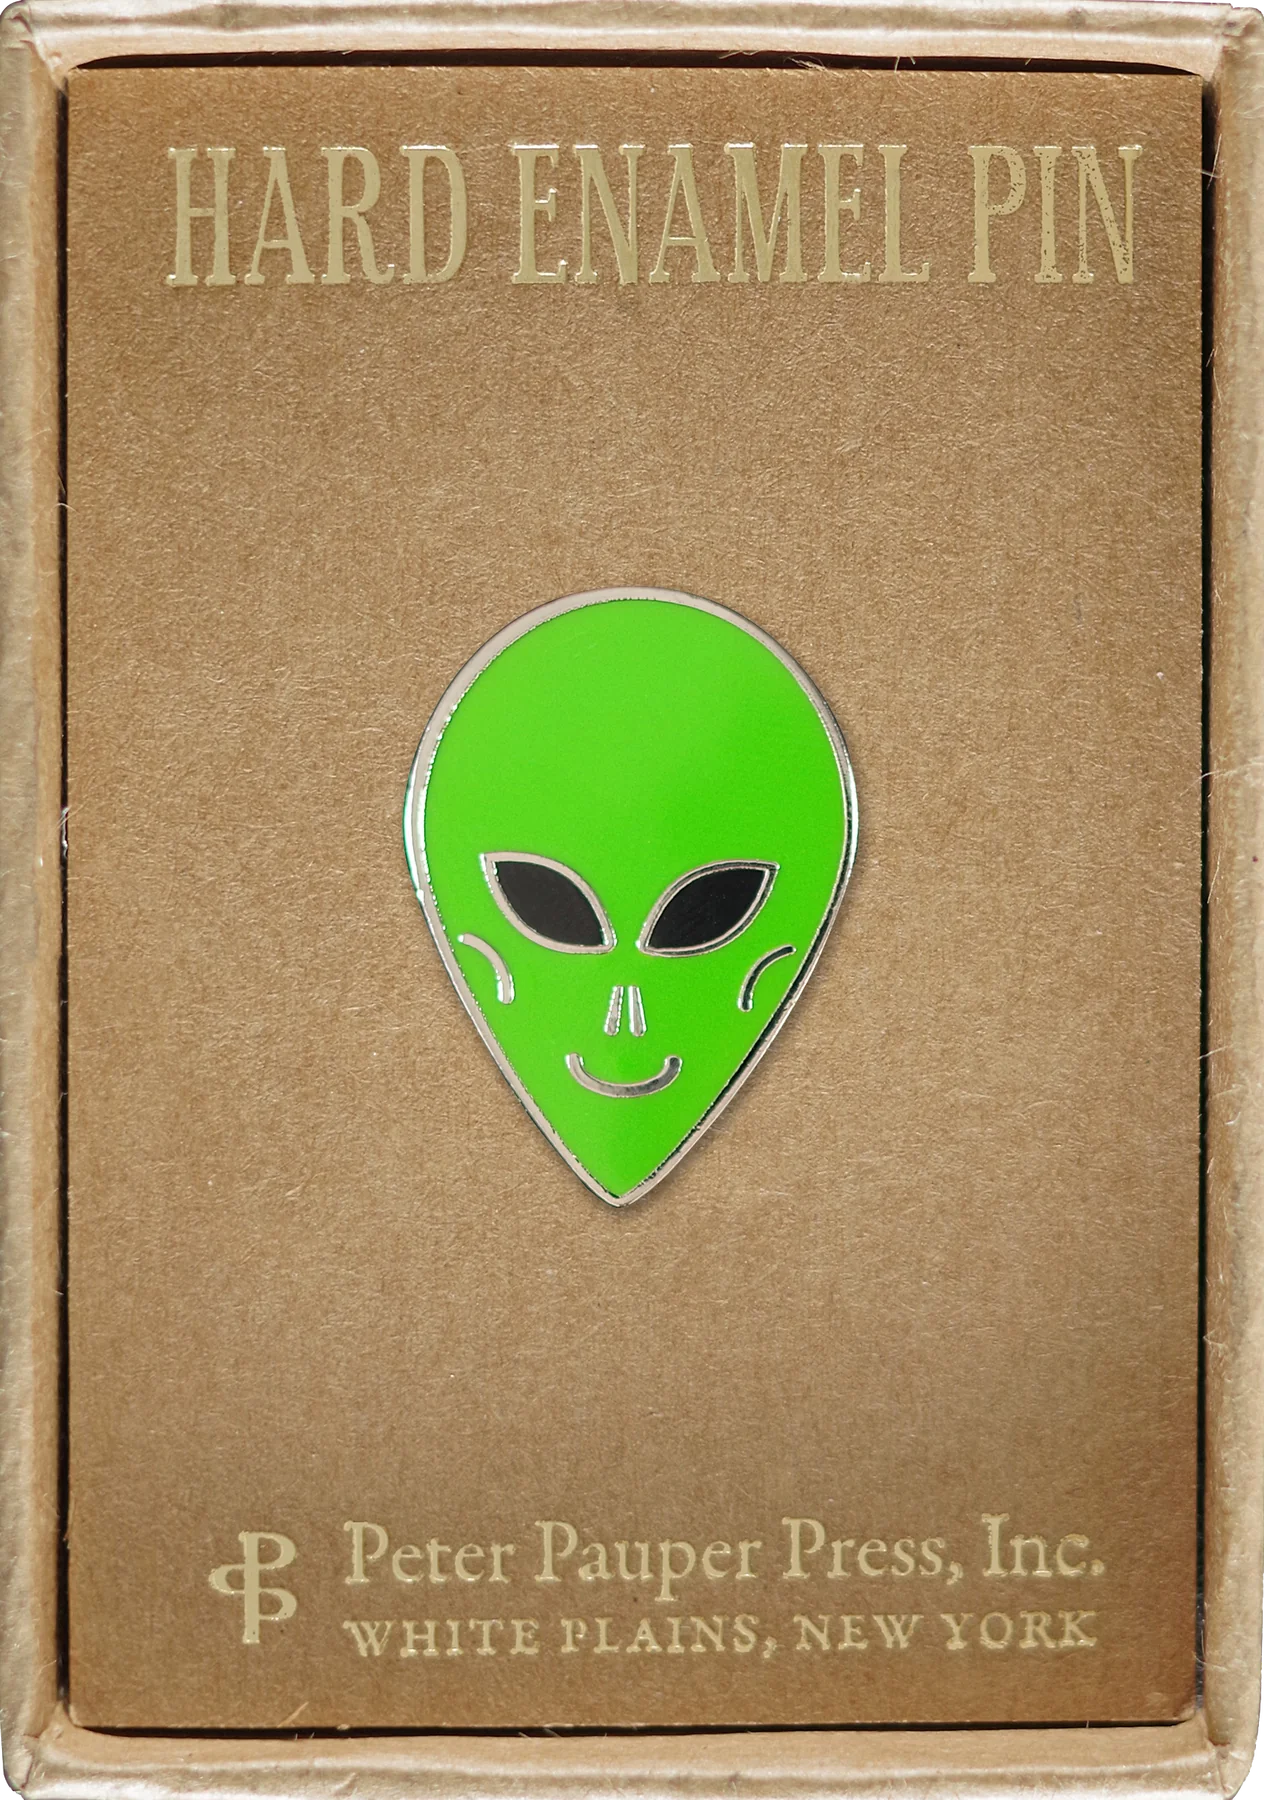 Green alien head pin with black eyes on a box that says 'hard enamel pin'